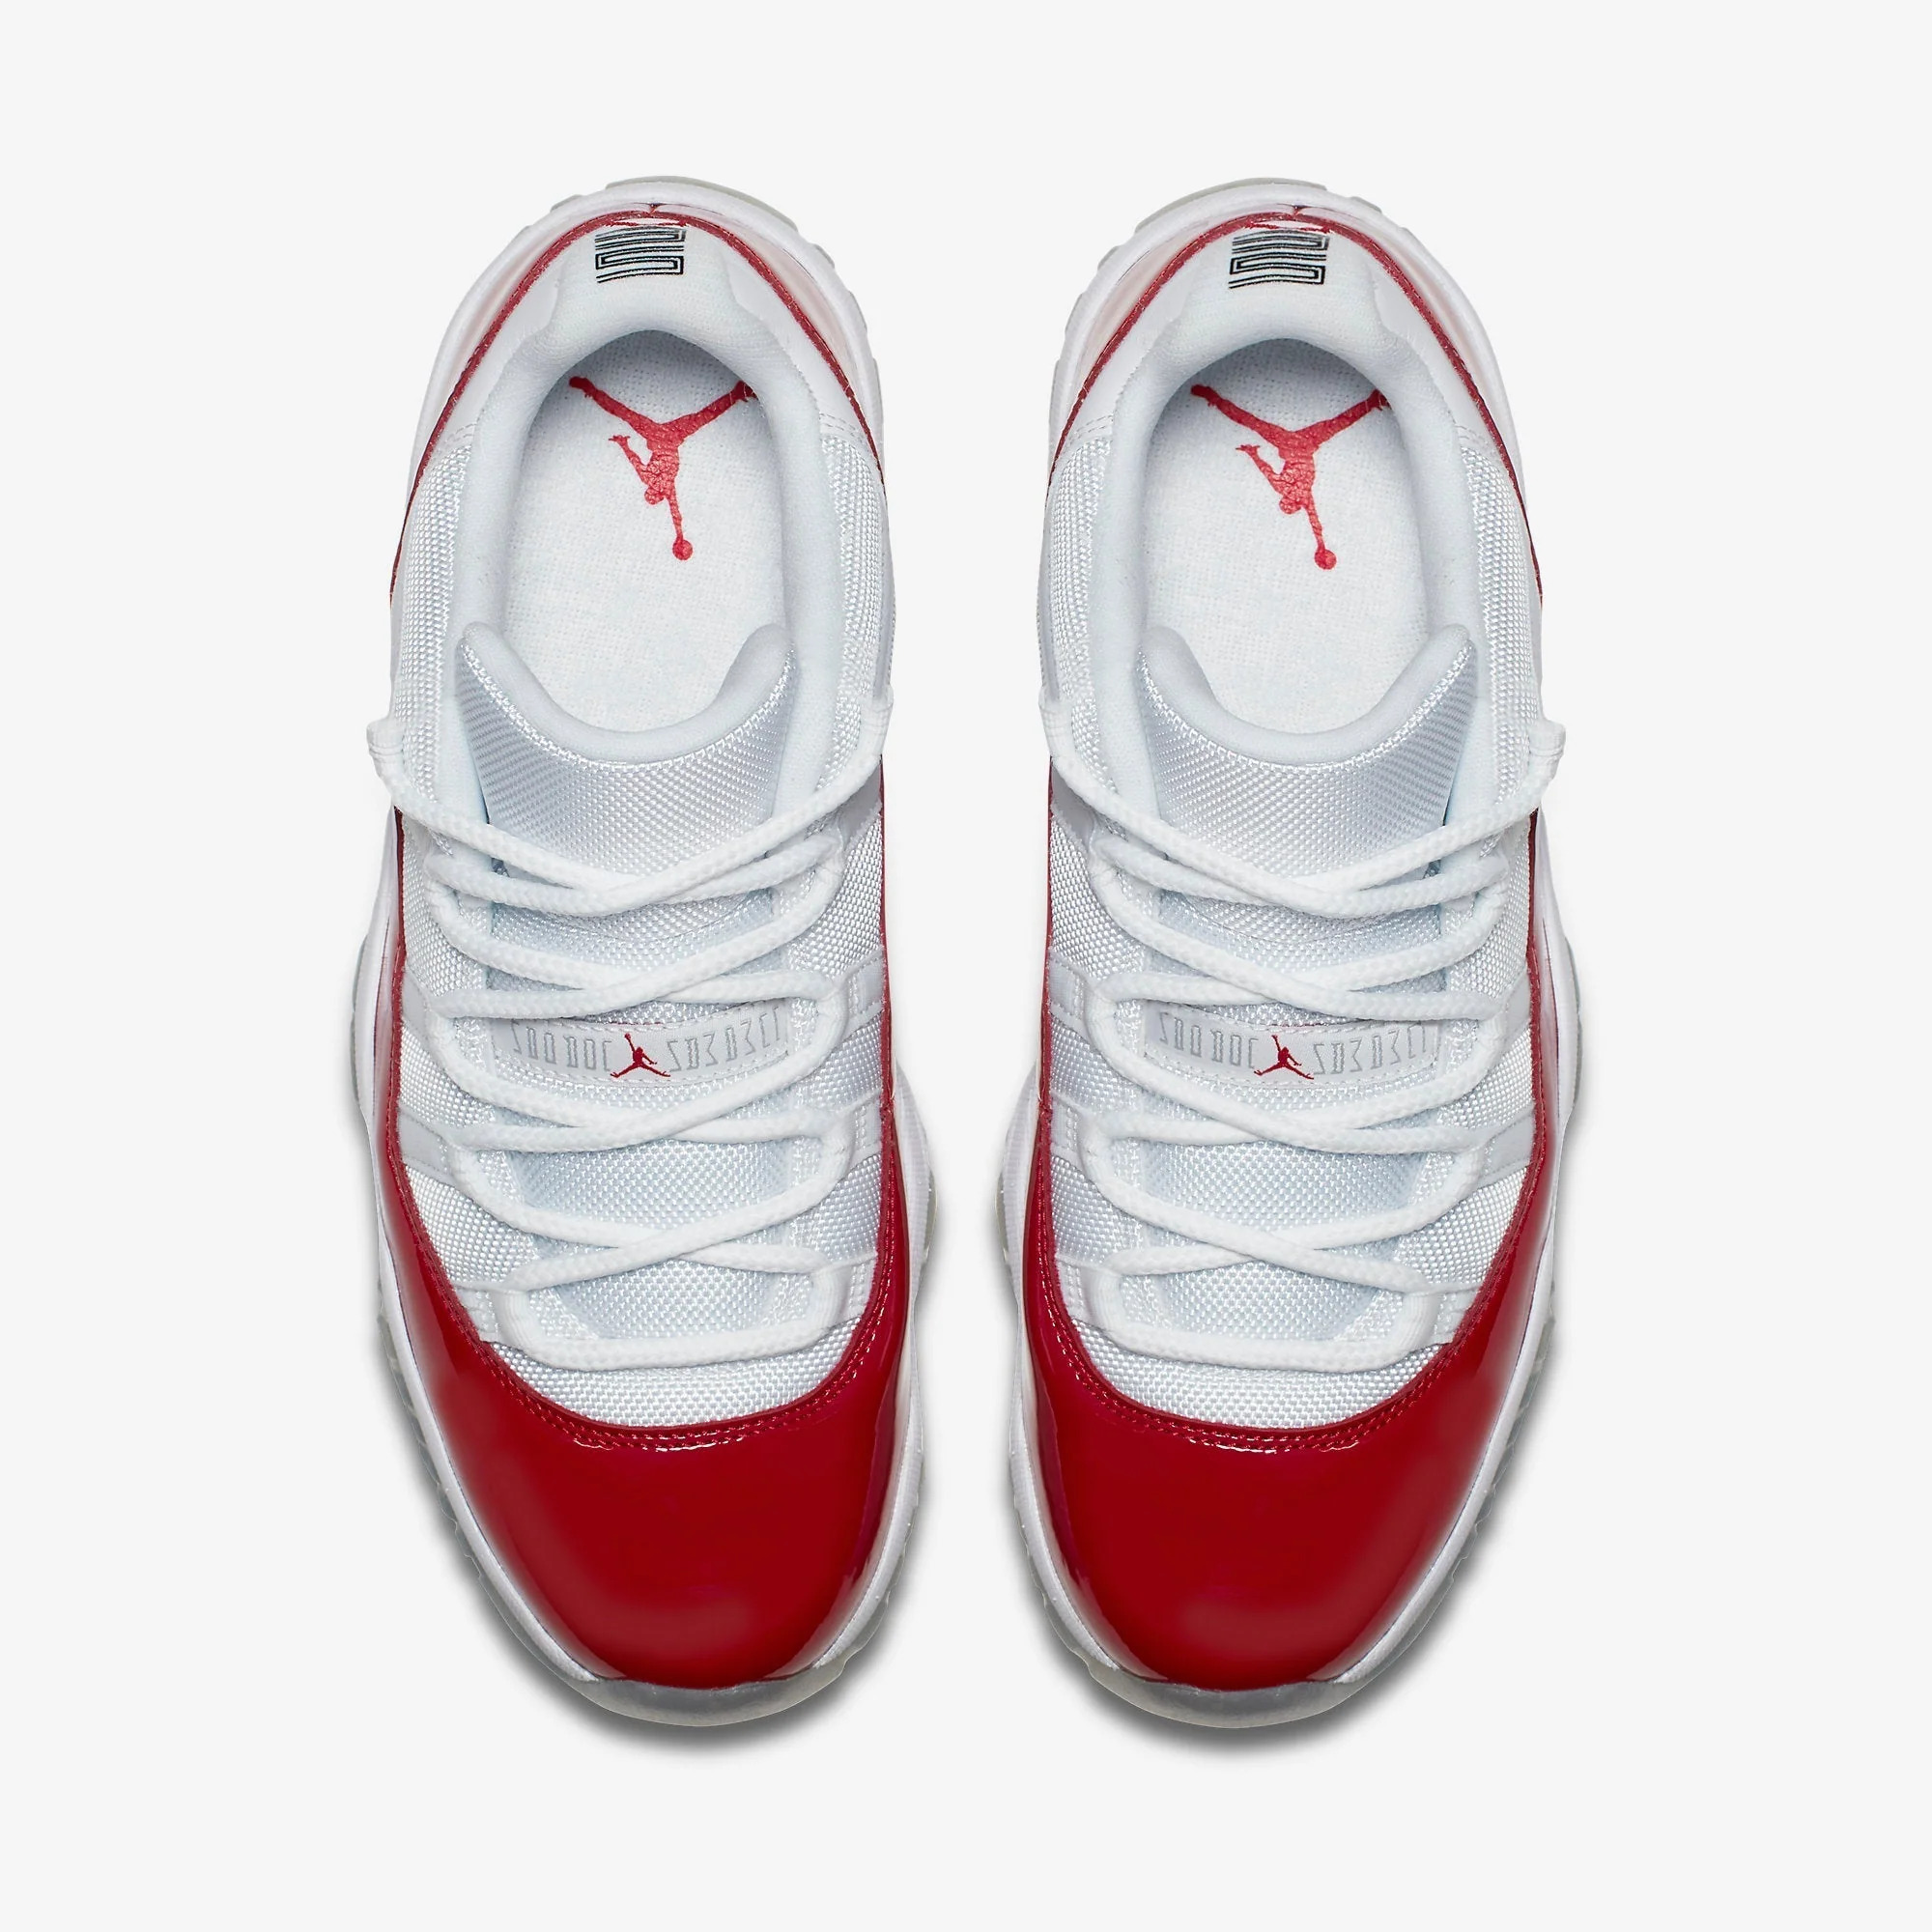 Nike Mens Air Jordan 11 Retro Low White/Varsity Red-Black 528895-102 - image 4 of 6